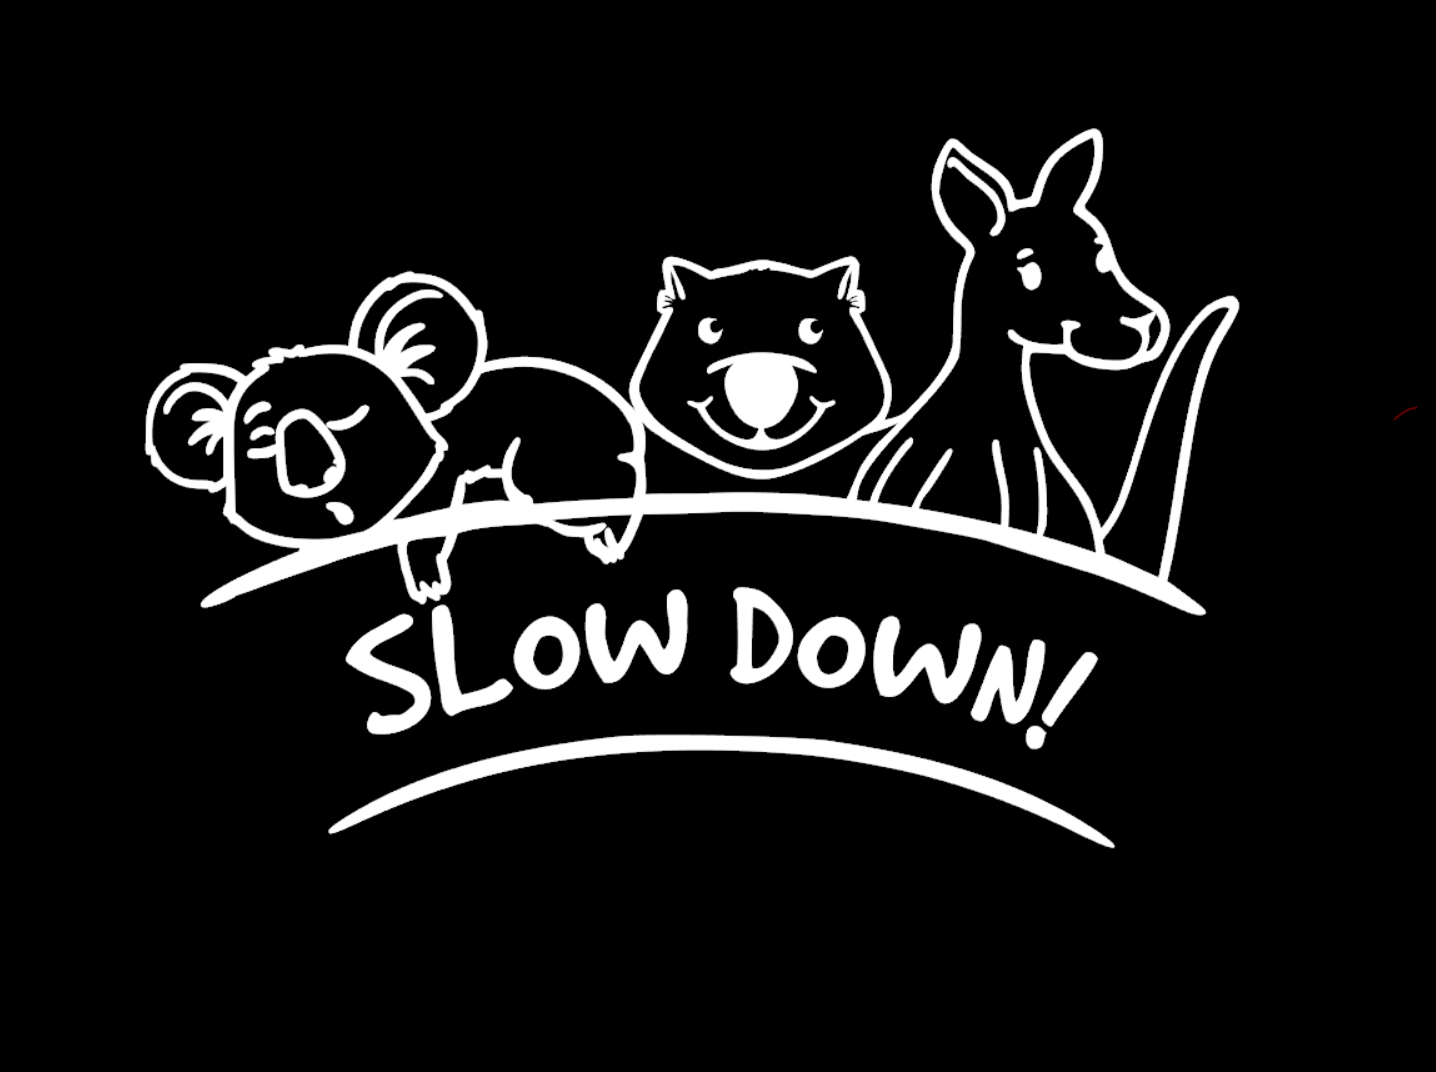 Slow Down Wildlife Car Decal / Sticker. Kangaroo , Wombat and Koala. Native Australian Wildlife Car Decal - My Crafty Dog